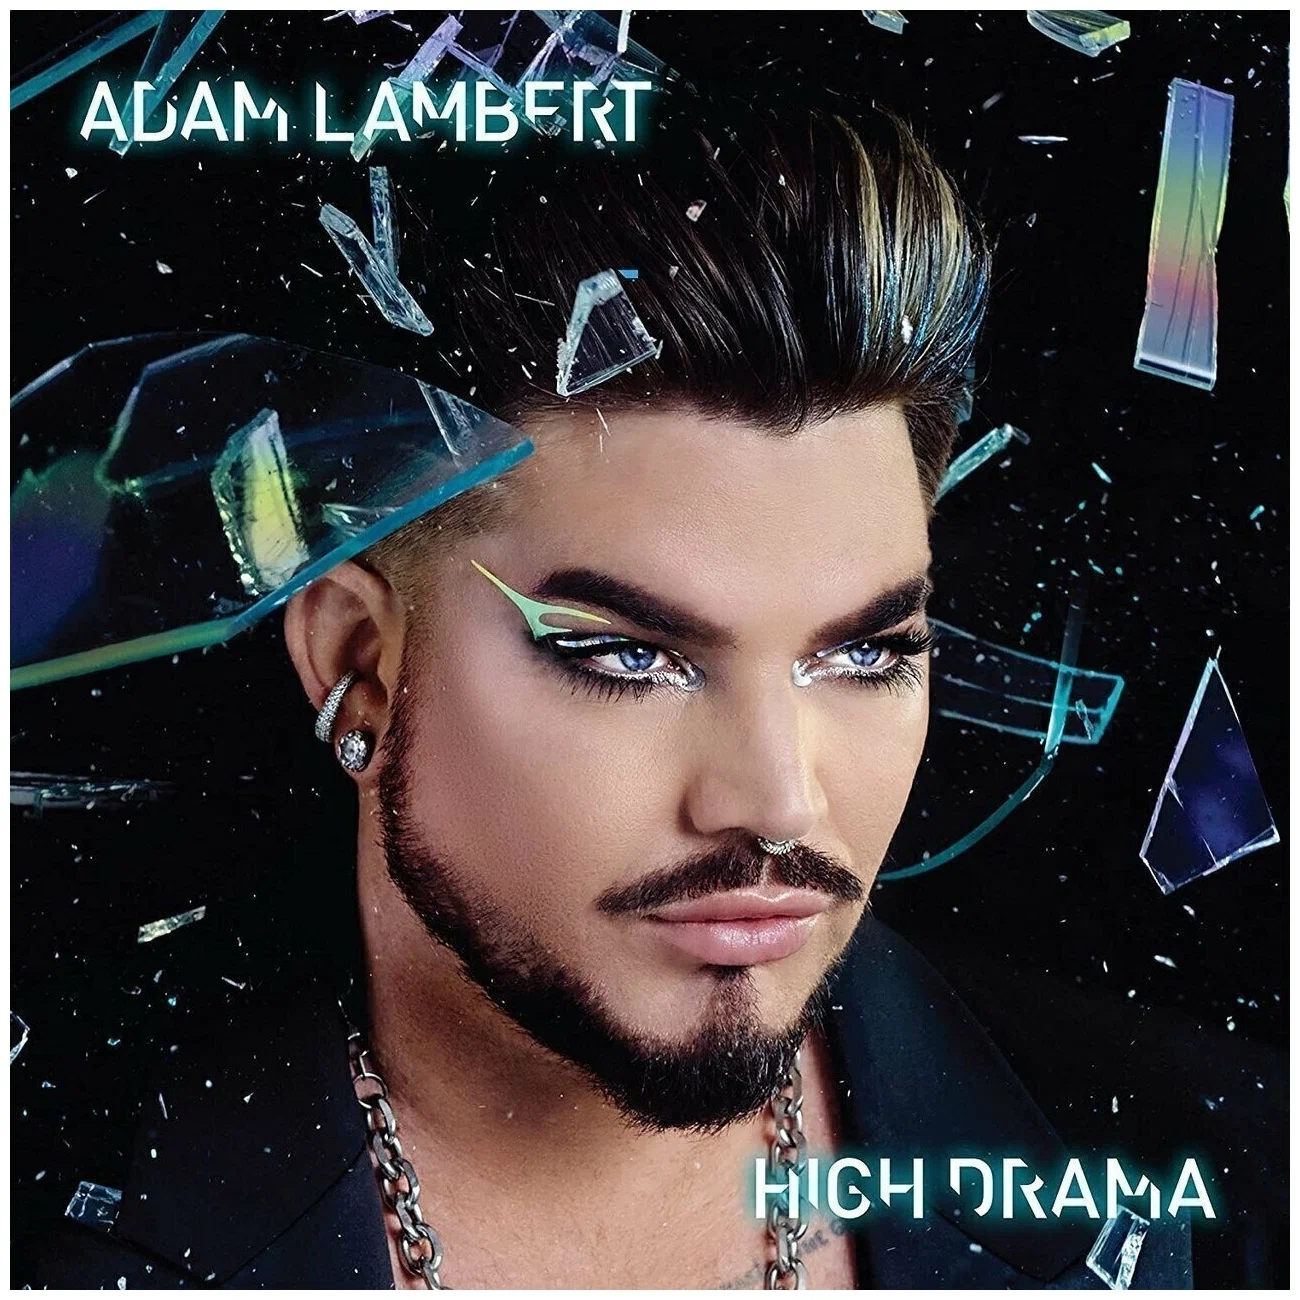 Виниловая Пластинка Lambert, Adam, High Drama (5054197308628) виниловая пластинка lambert adam high drama 5054197308628